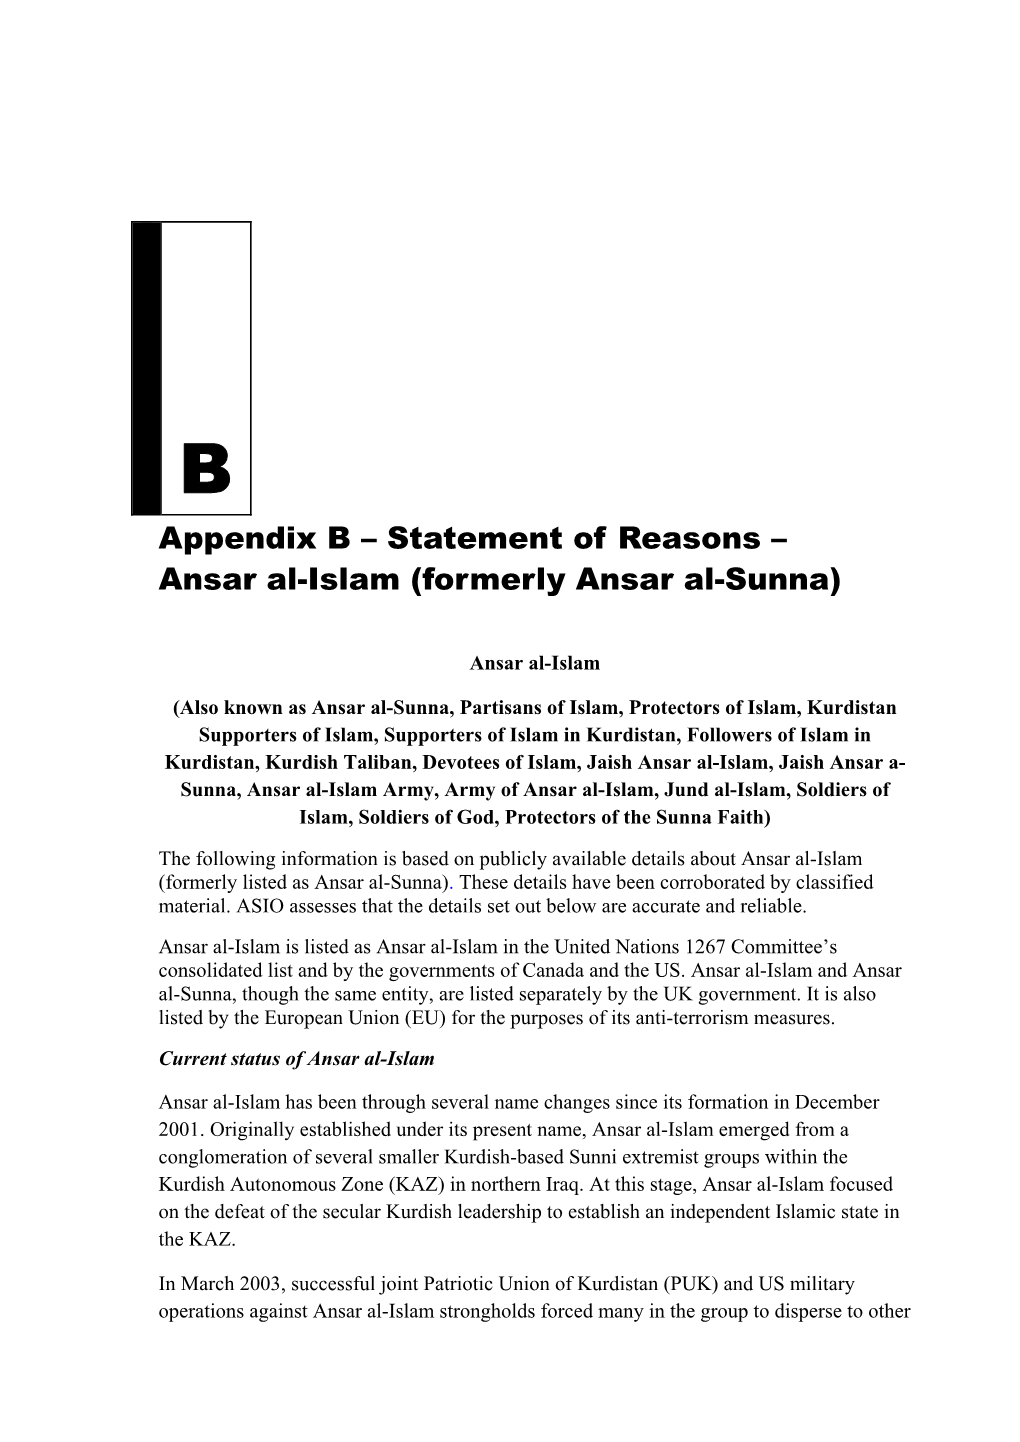 Appendix B – Statement of Reasons – Ansar Al-Islam (Formerly Ansar Al-Sunna)